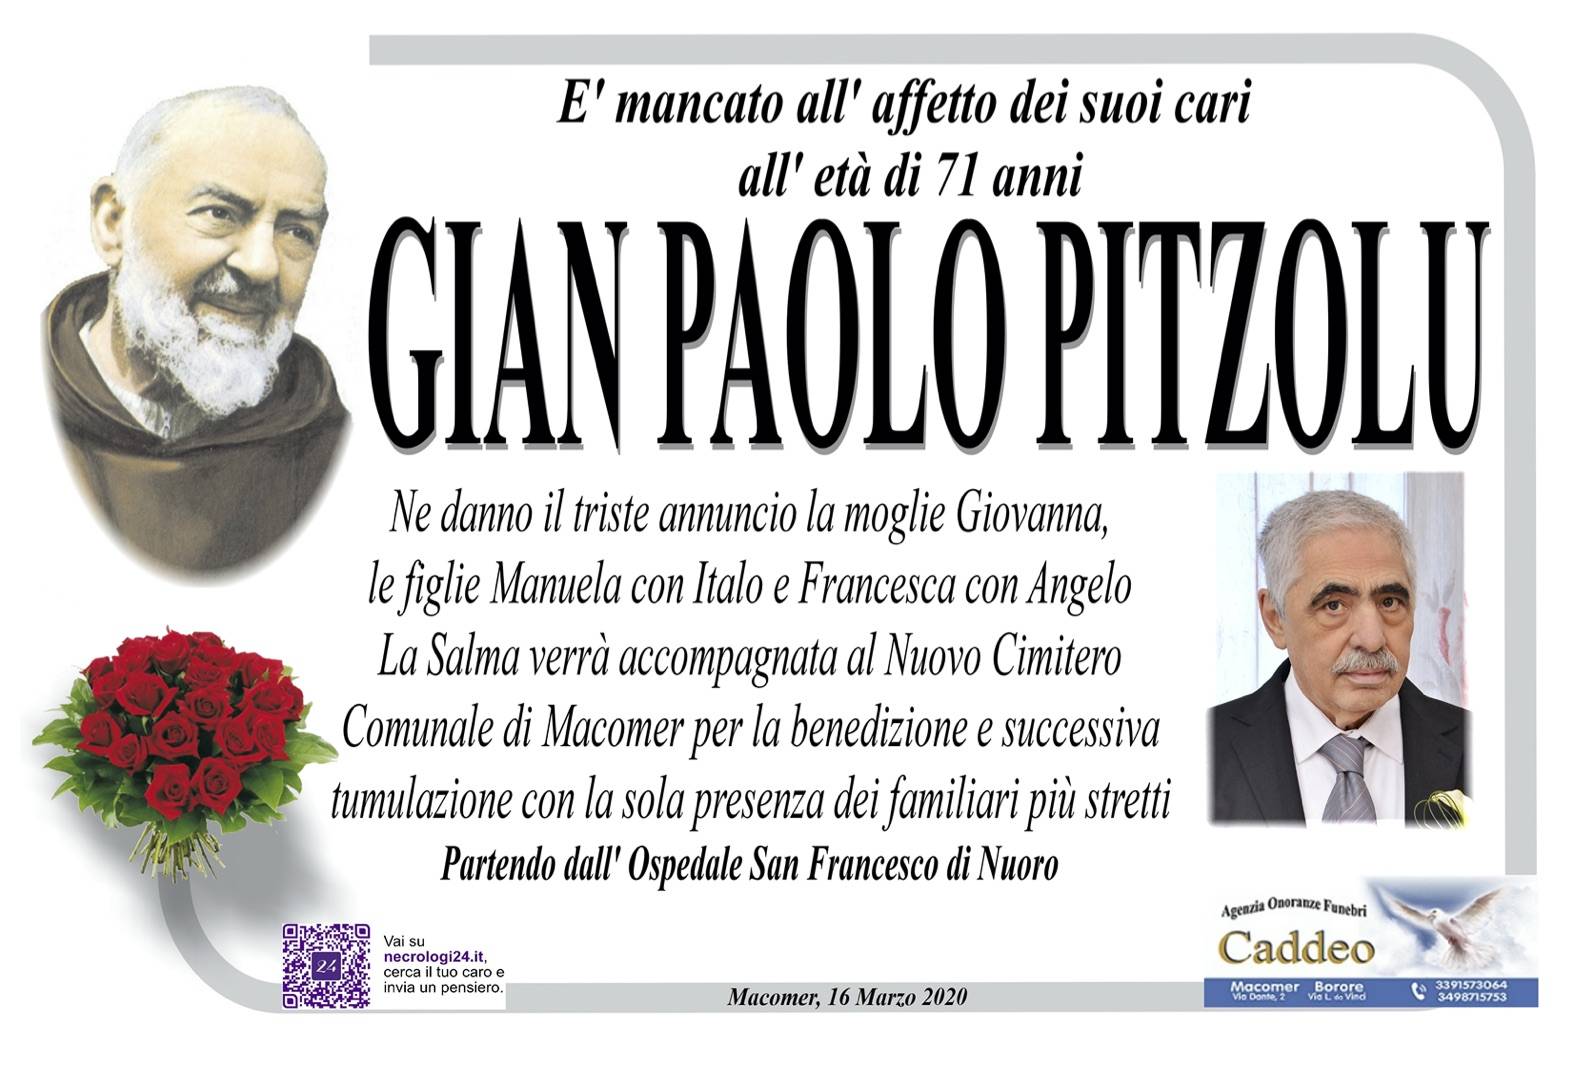 Gian Paolo Pitzolu